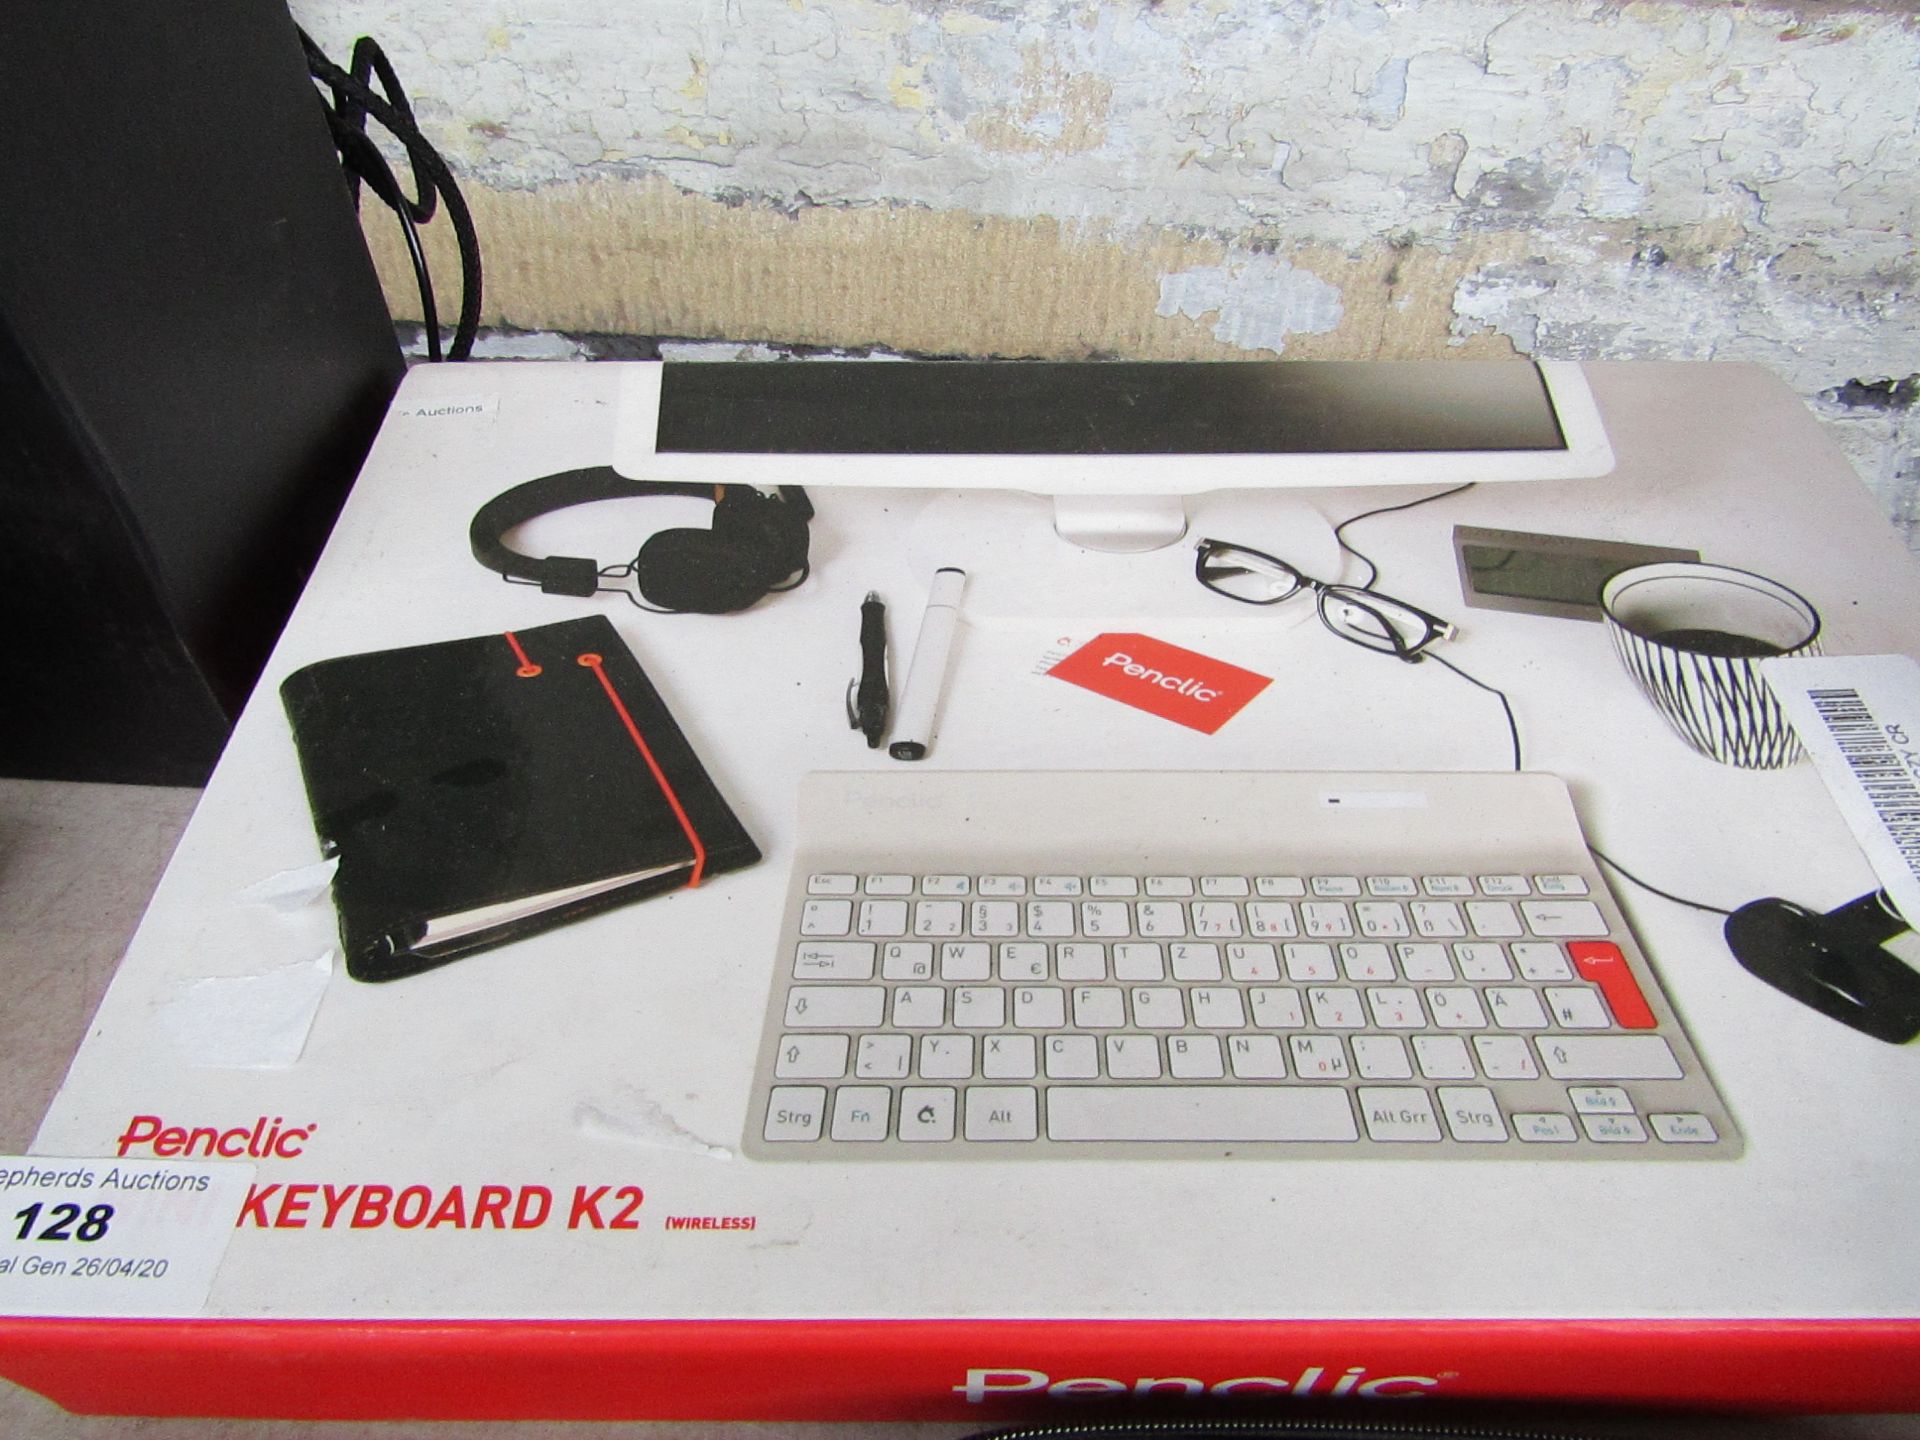 PENCLIC - Mini Keyboard K2 Wireless - Untested & Boxed.